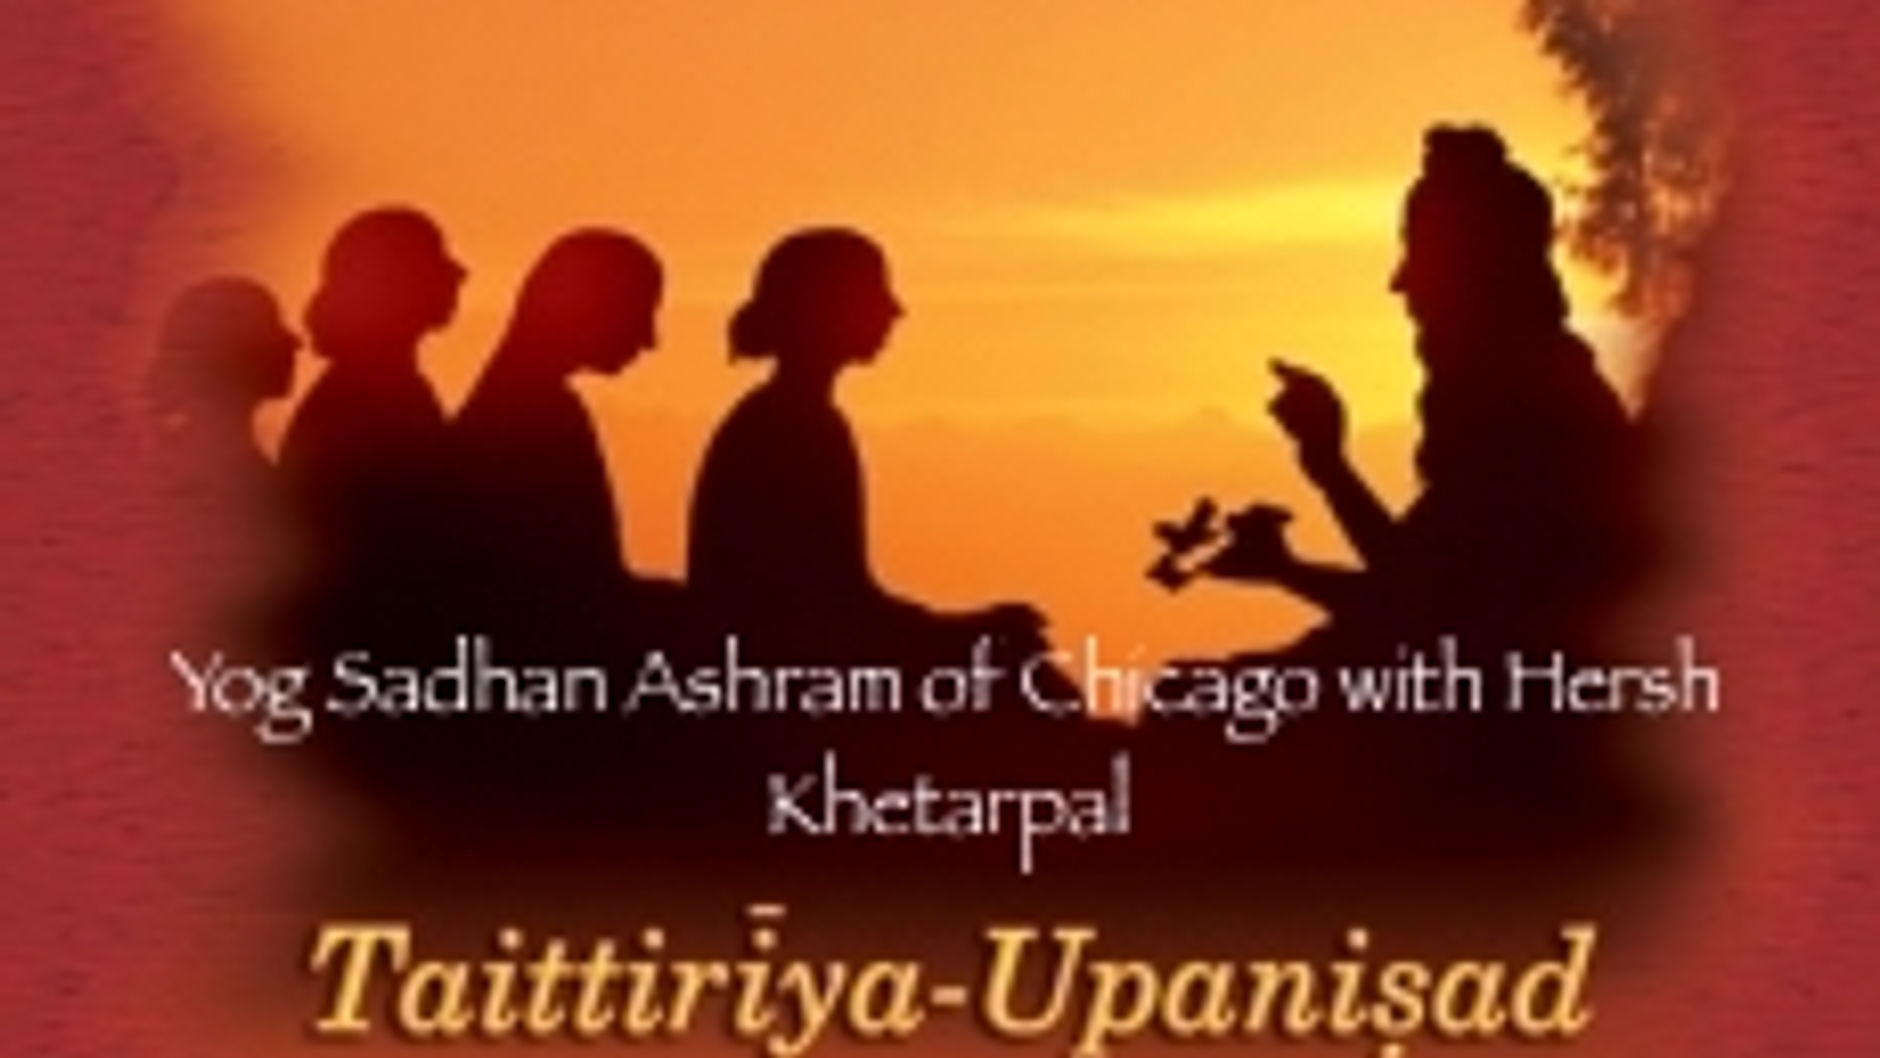 Taittiriya Upanishad